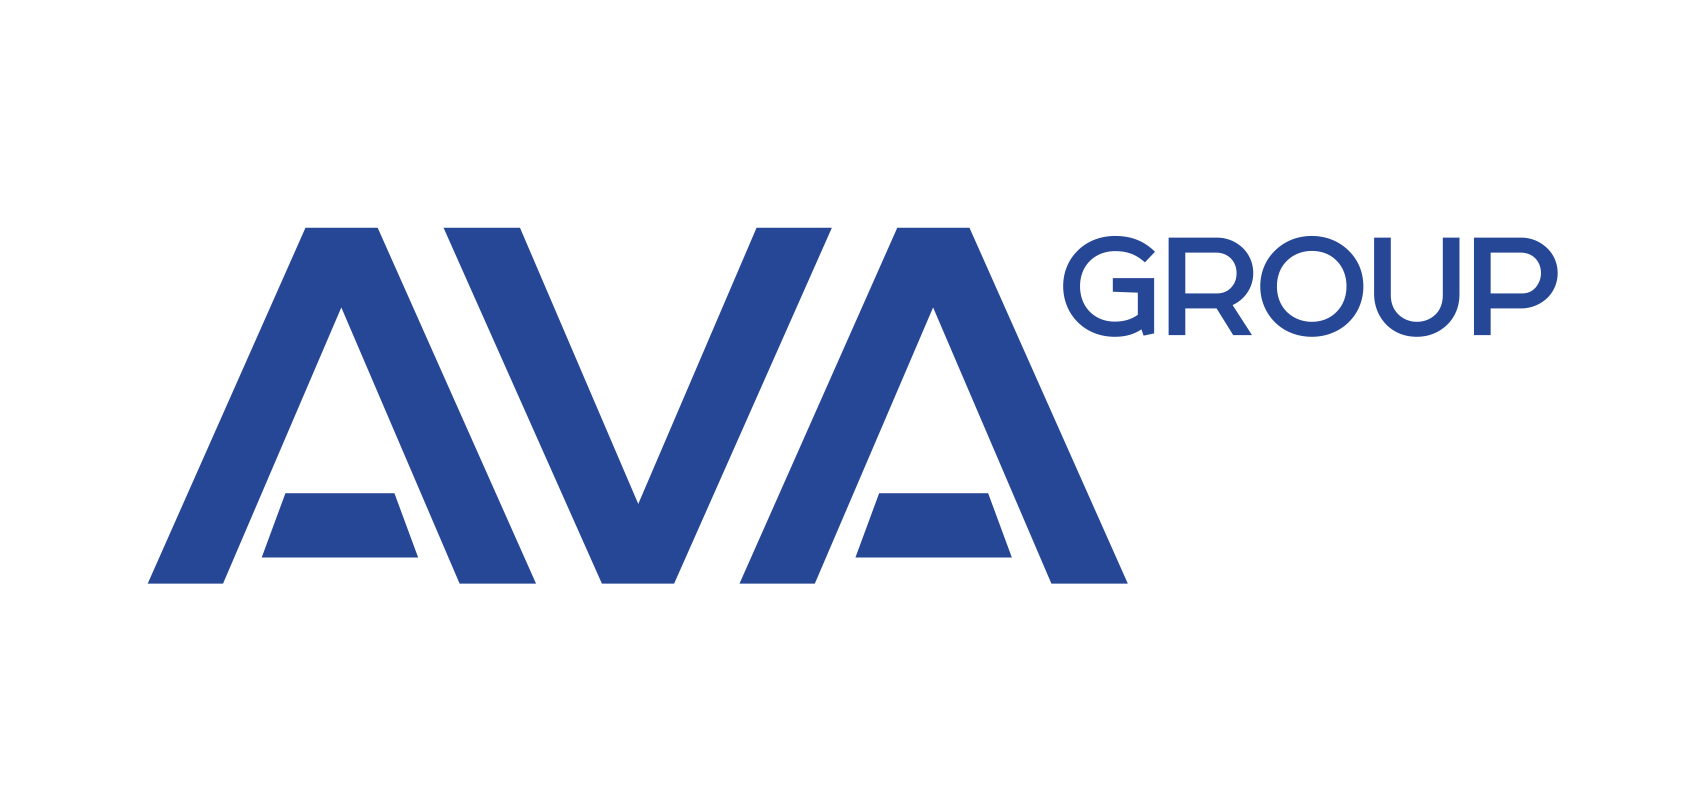 Ава групп логотип. Ава для группы. Ava Group Краснодар. Логотип ава групп строительная компания.